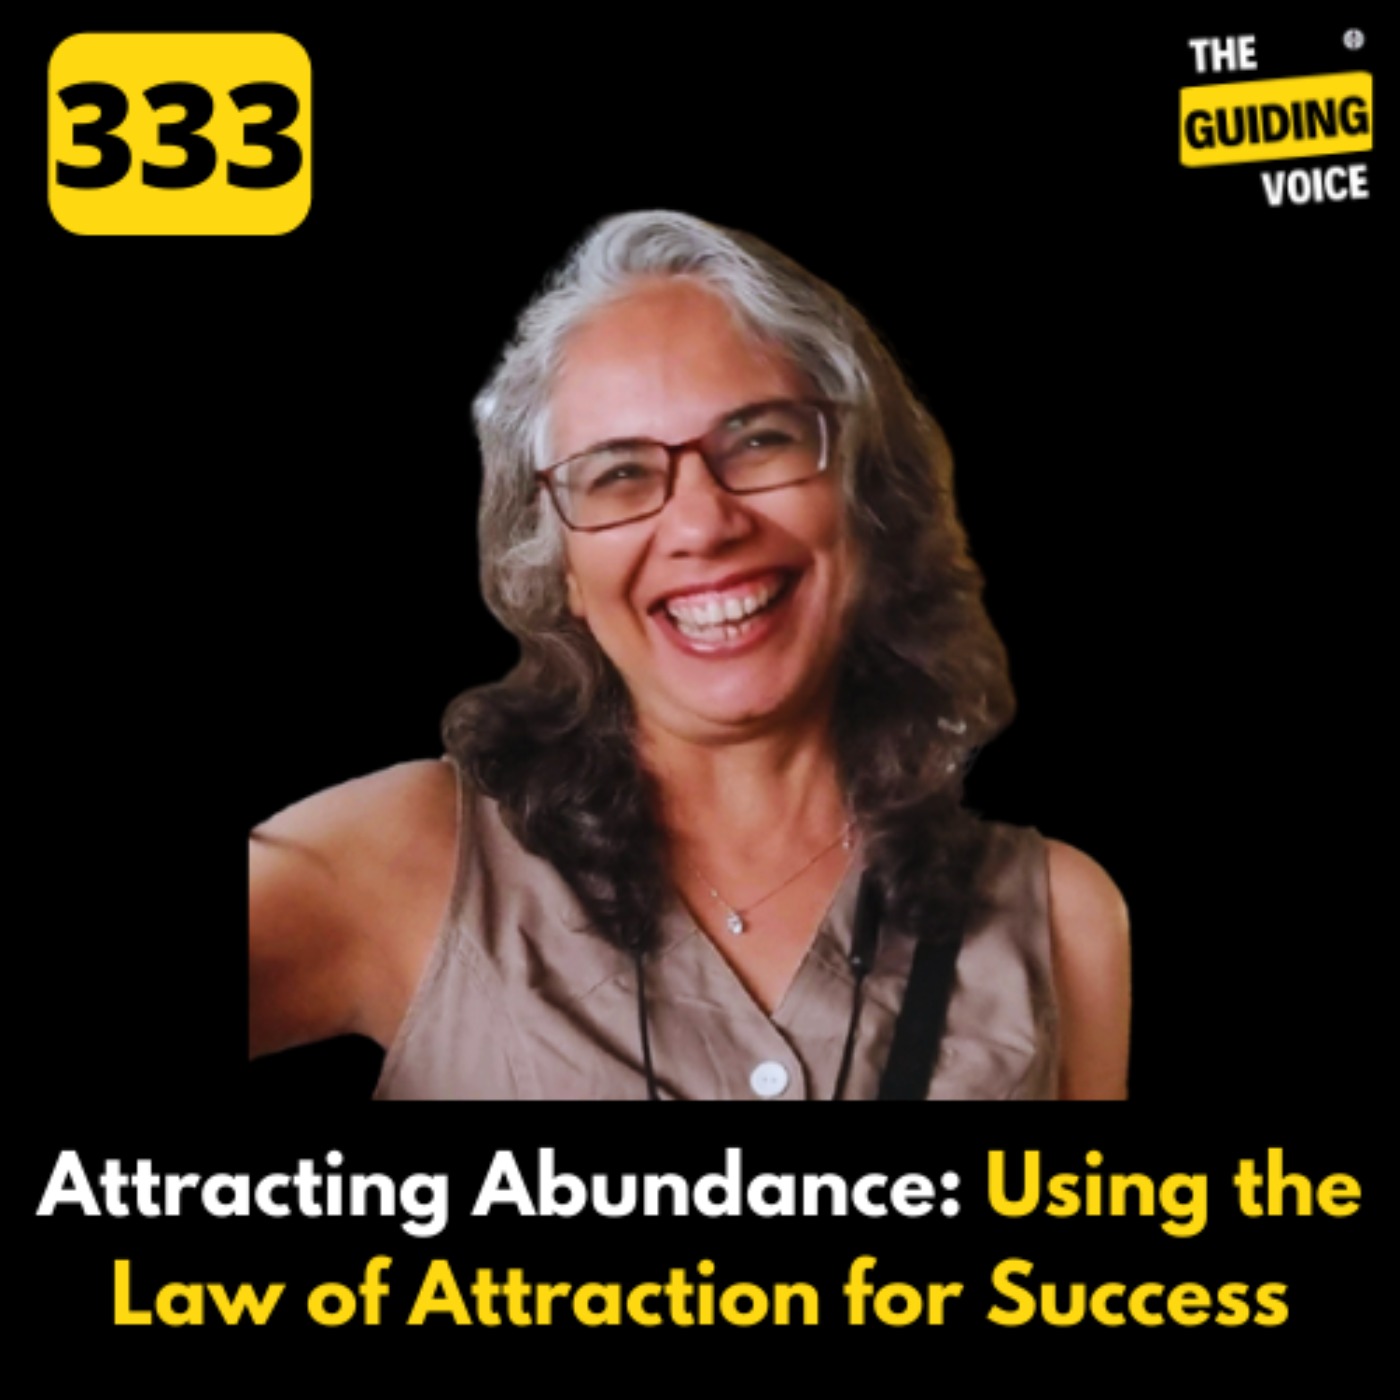 Attracting Abundance: Using the Law of Attraction for Success | Nita Sundararaju | #TGV333